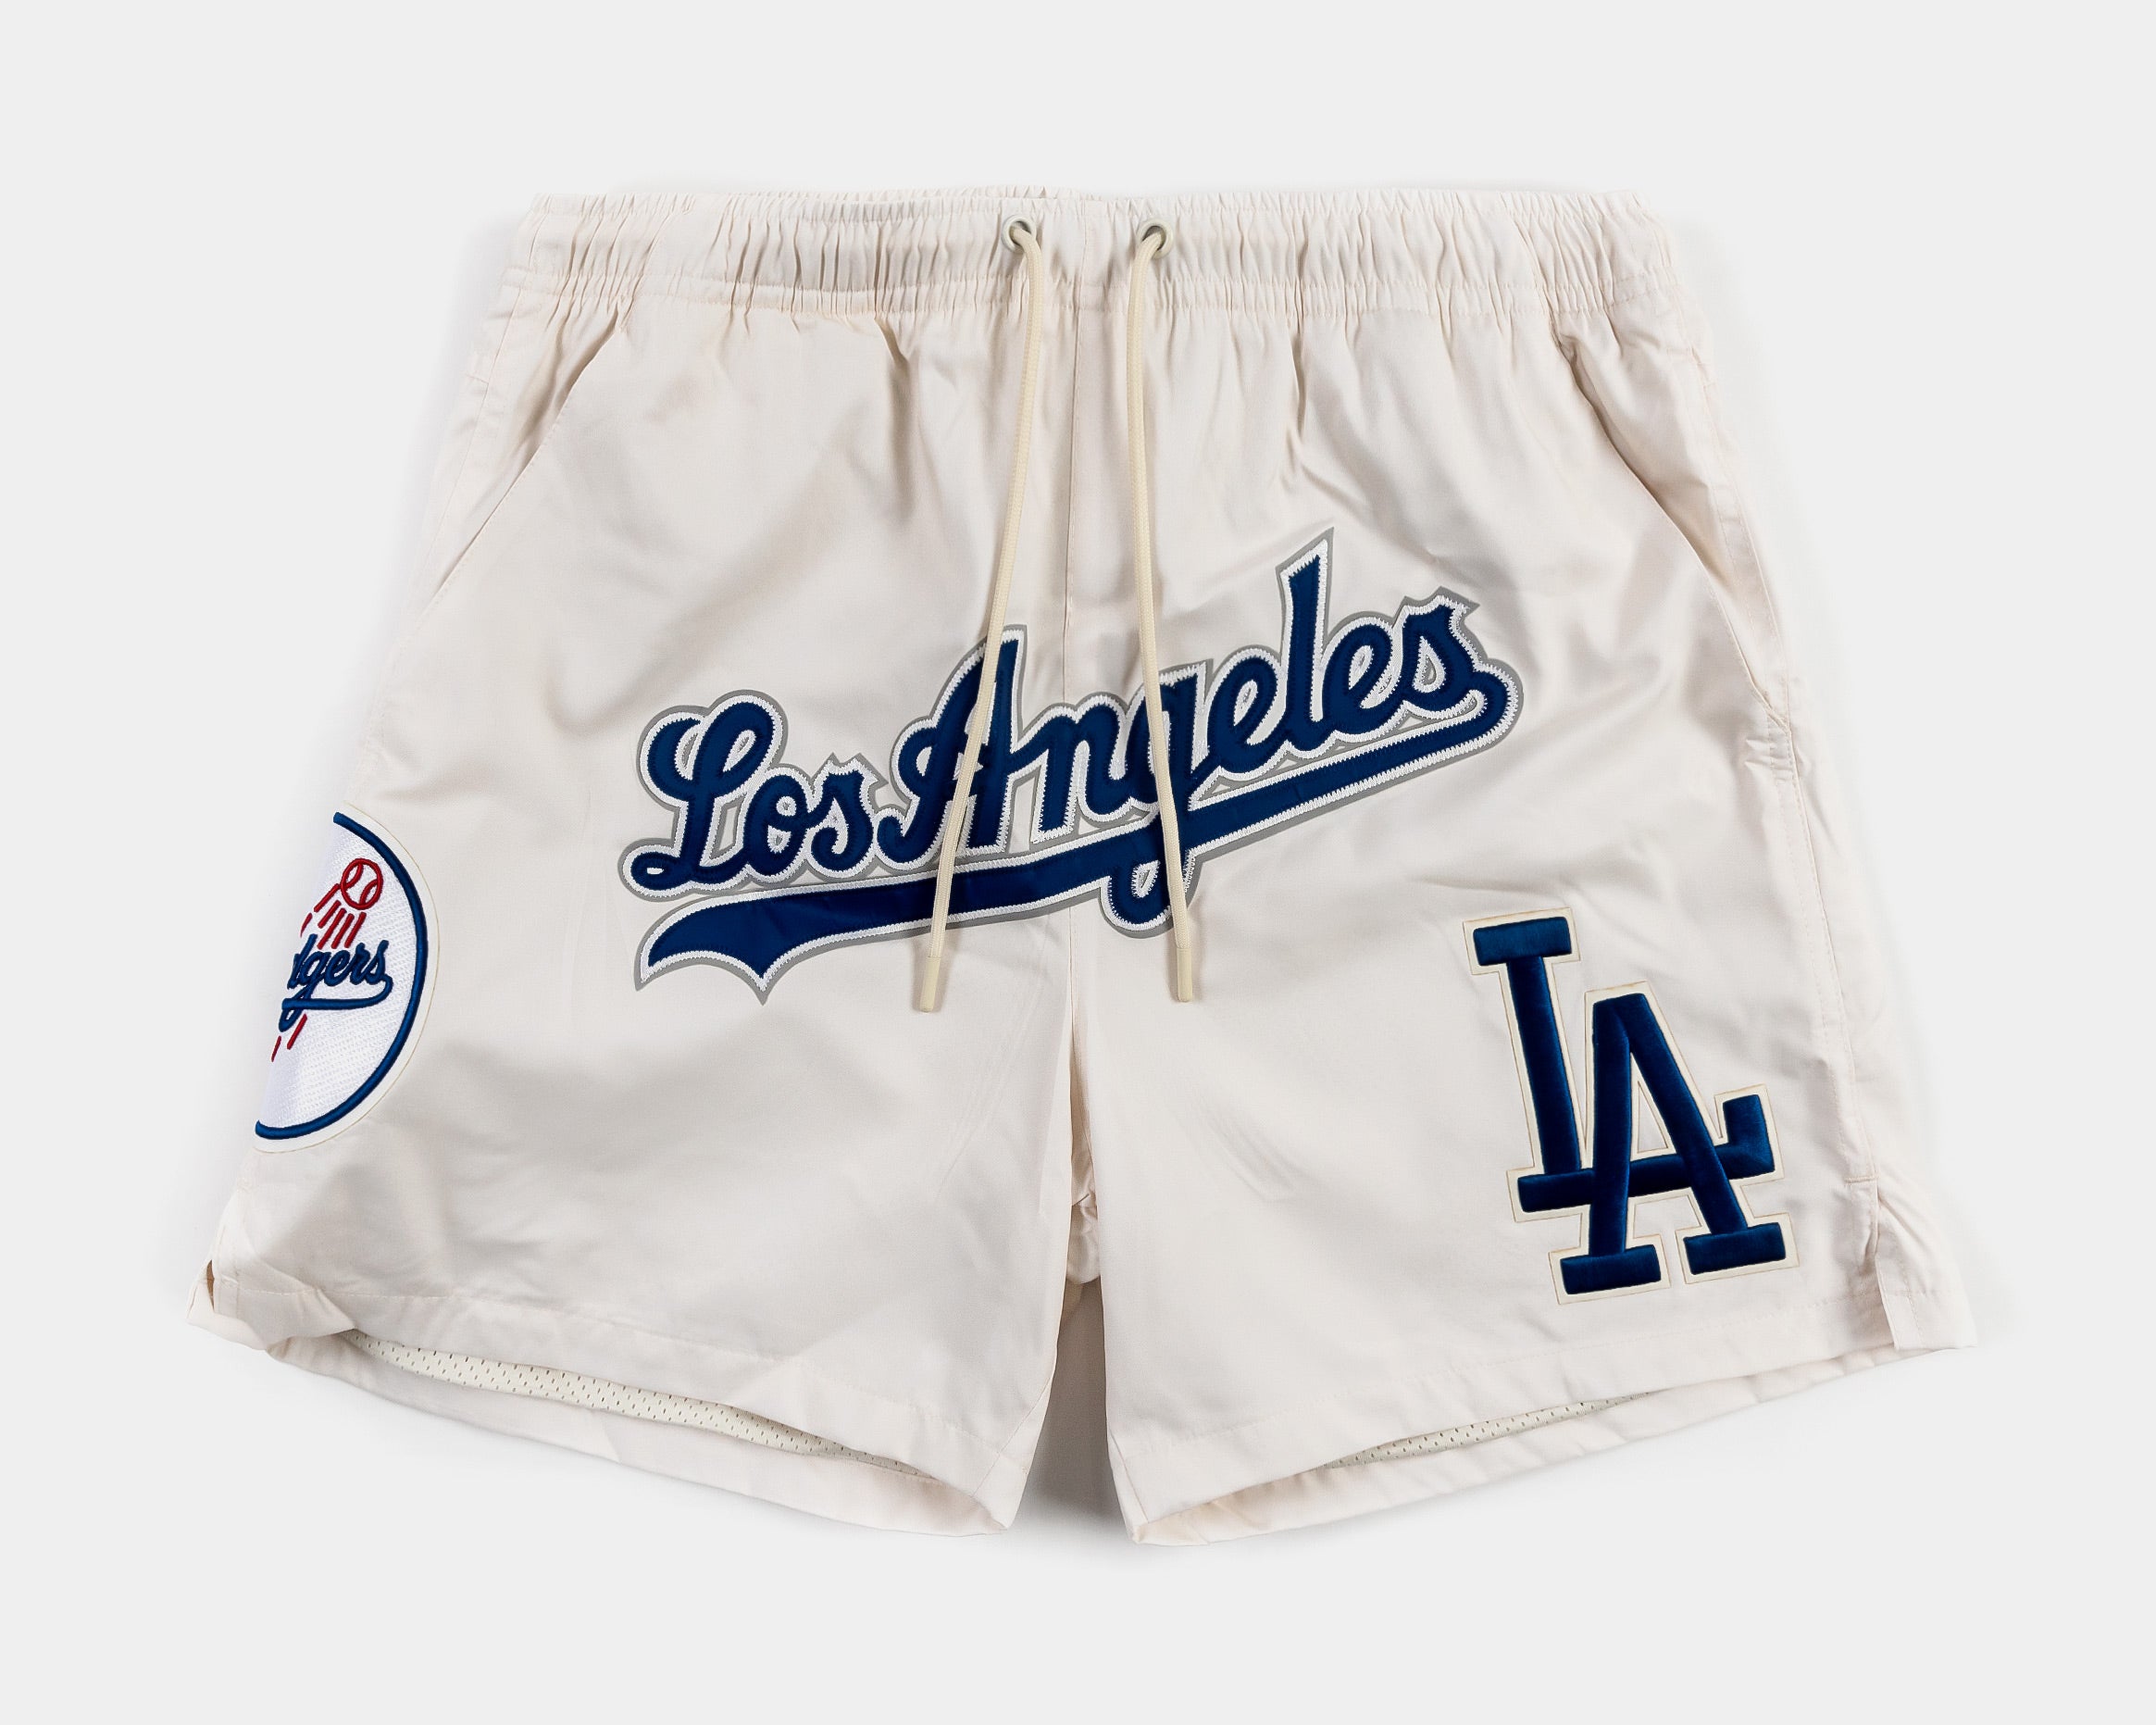 Los Angeles Dodgers Basketball Shorts - Grey